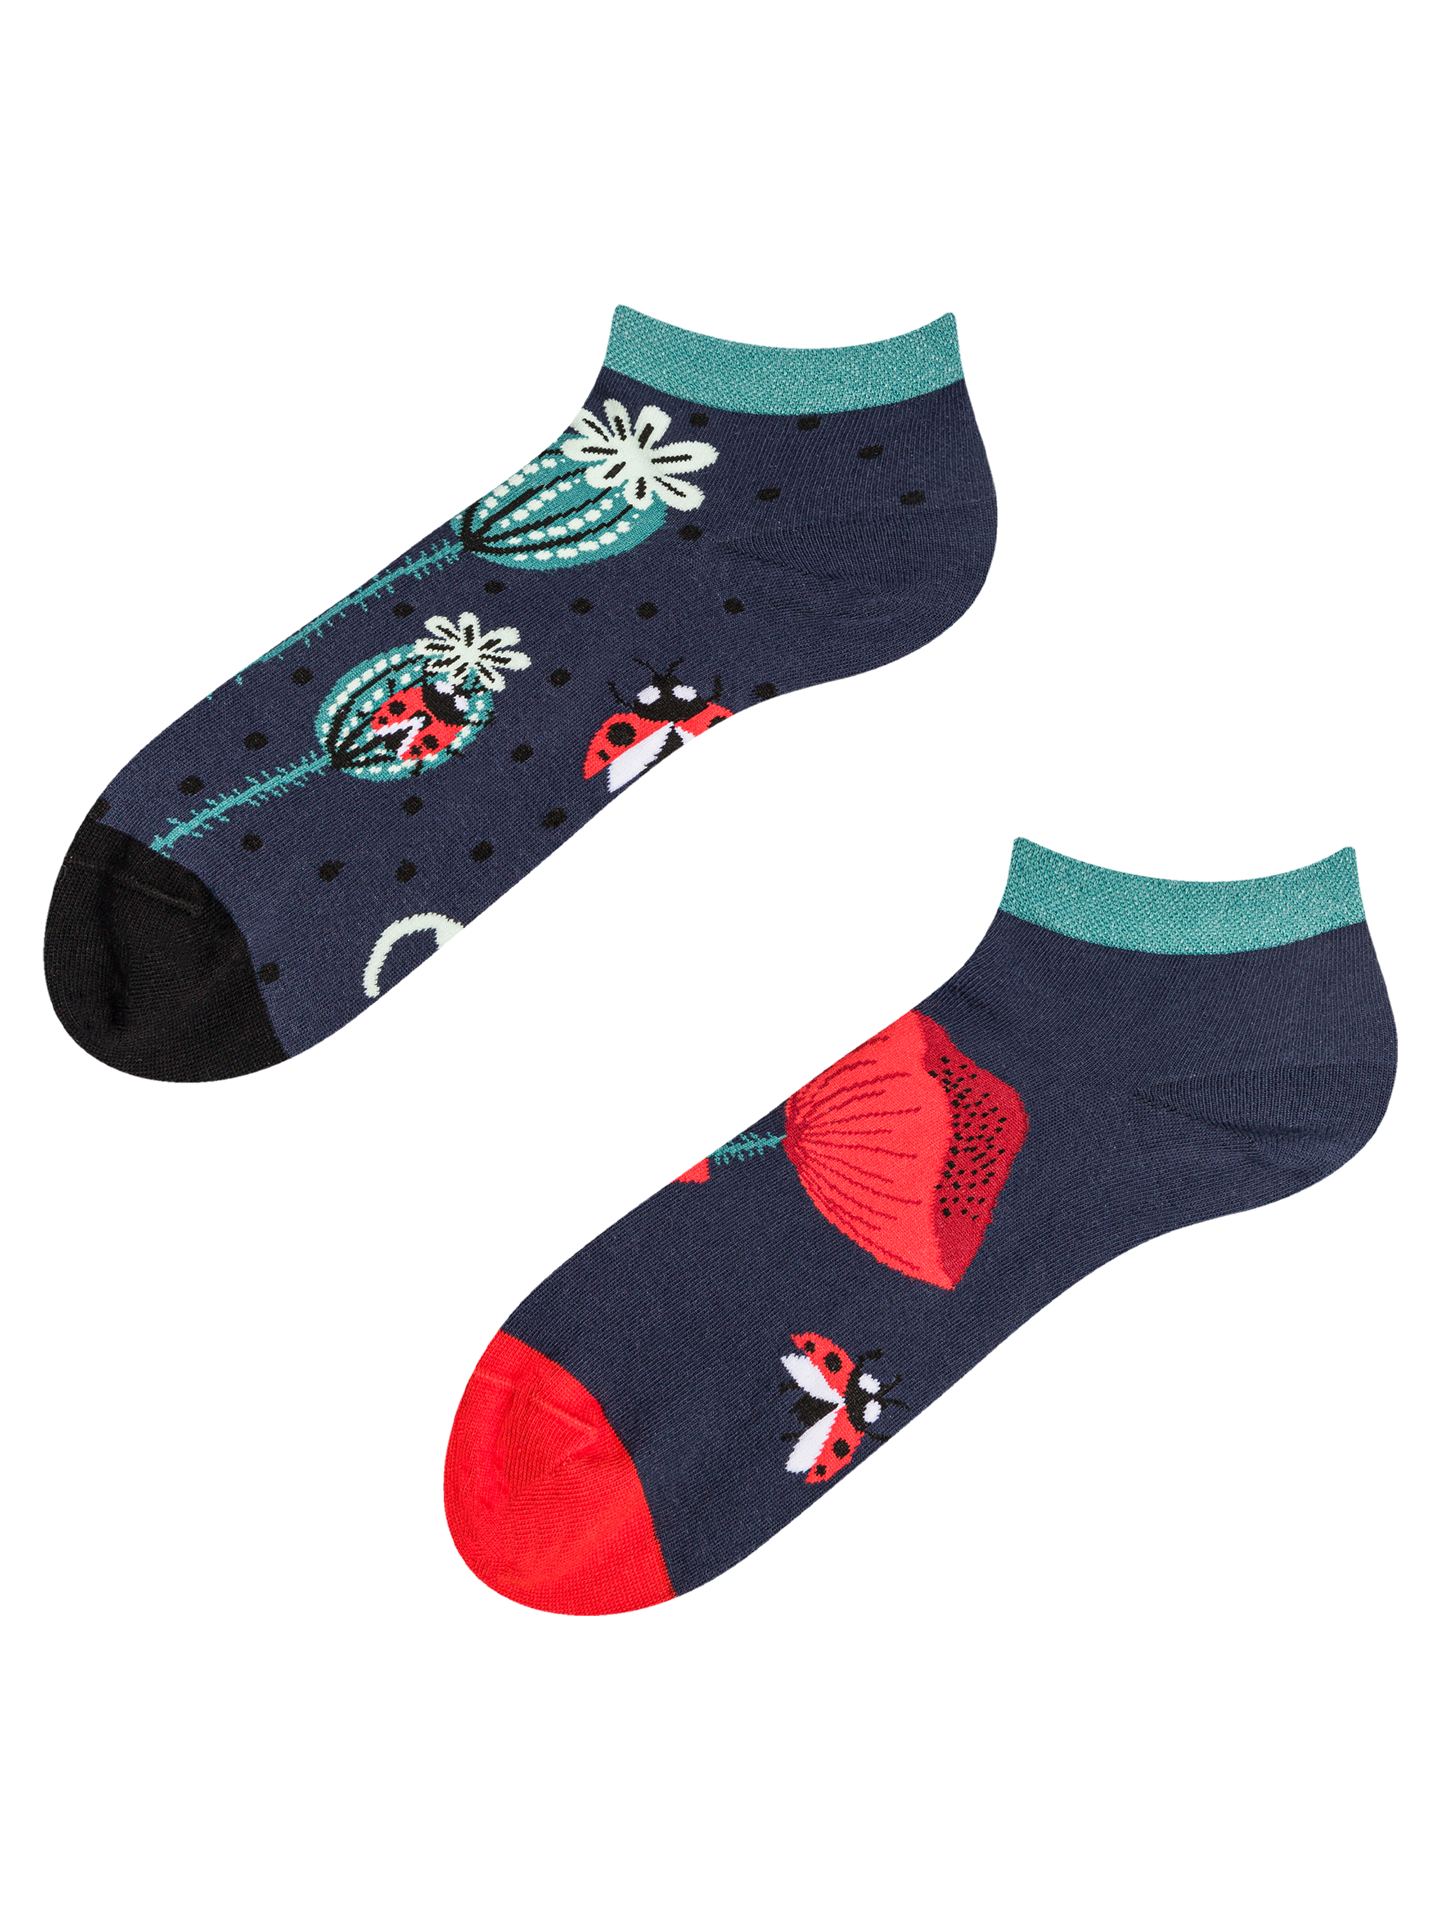 Ankle Socks Ladybugs & Poppy Flowers